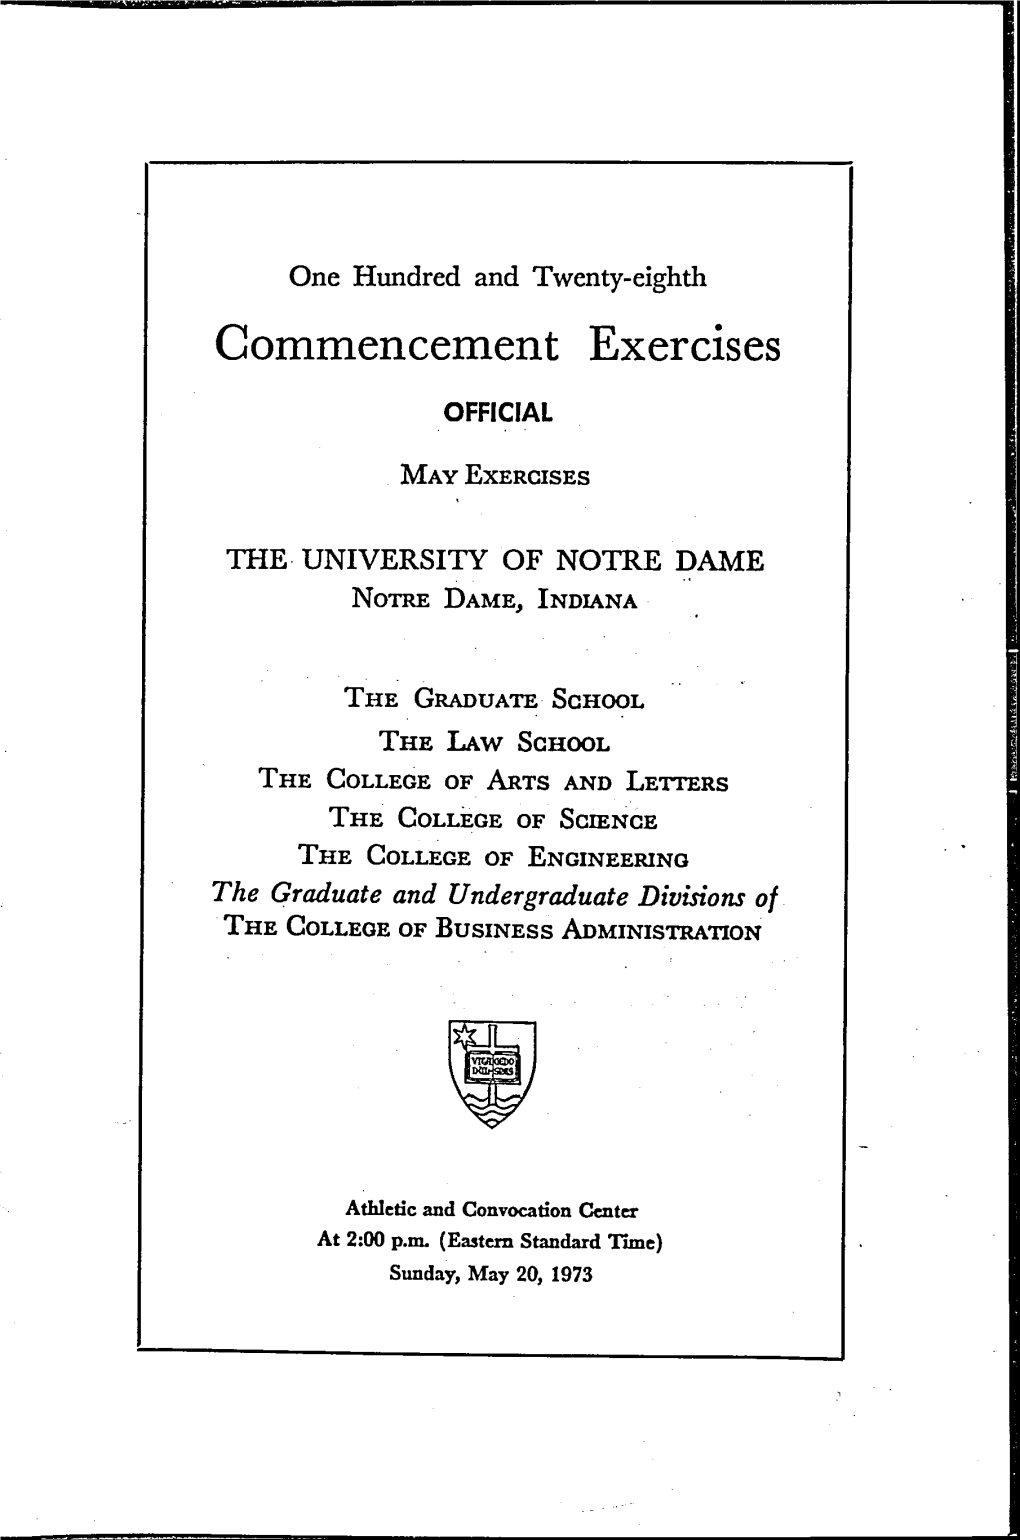 1973-05-20 University of Notre Dame Commencement Program